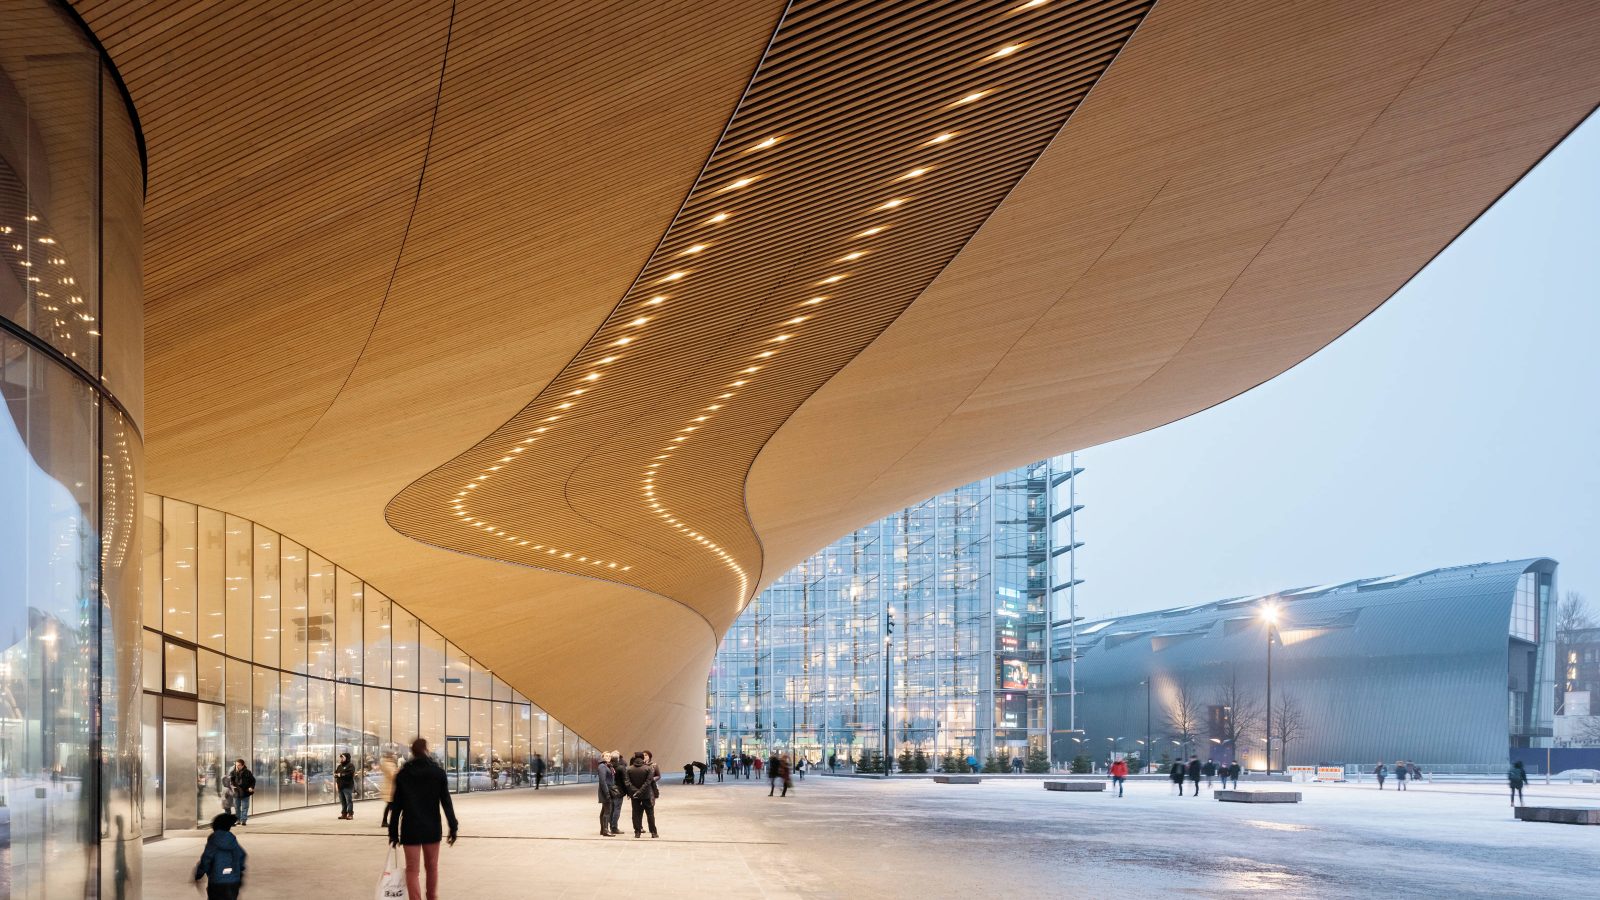 ARQUITETURA ICÔNICA NA FINLÂNDIA Helsinki Central Library Oodi by ALA Architects